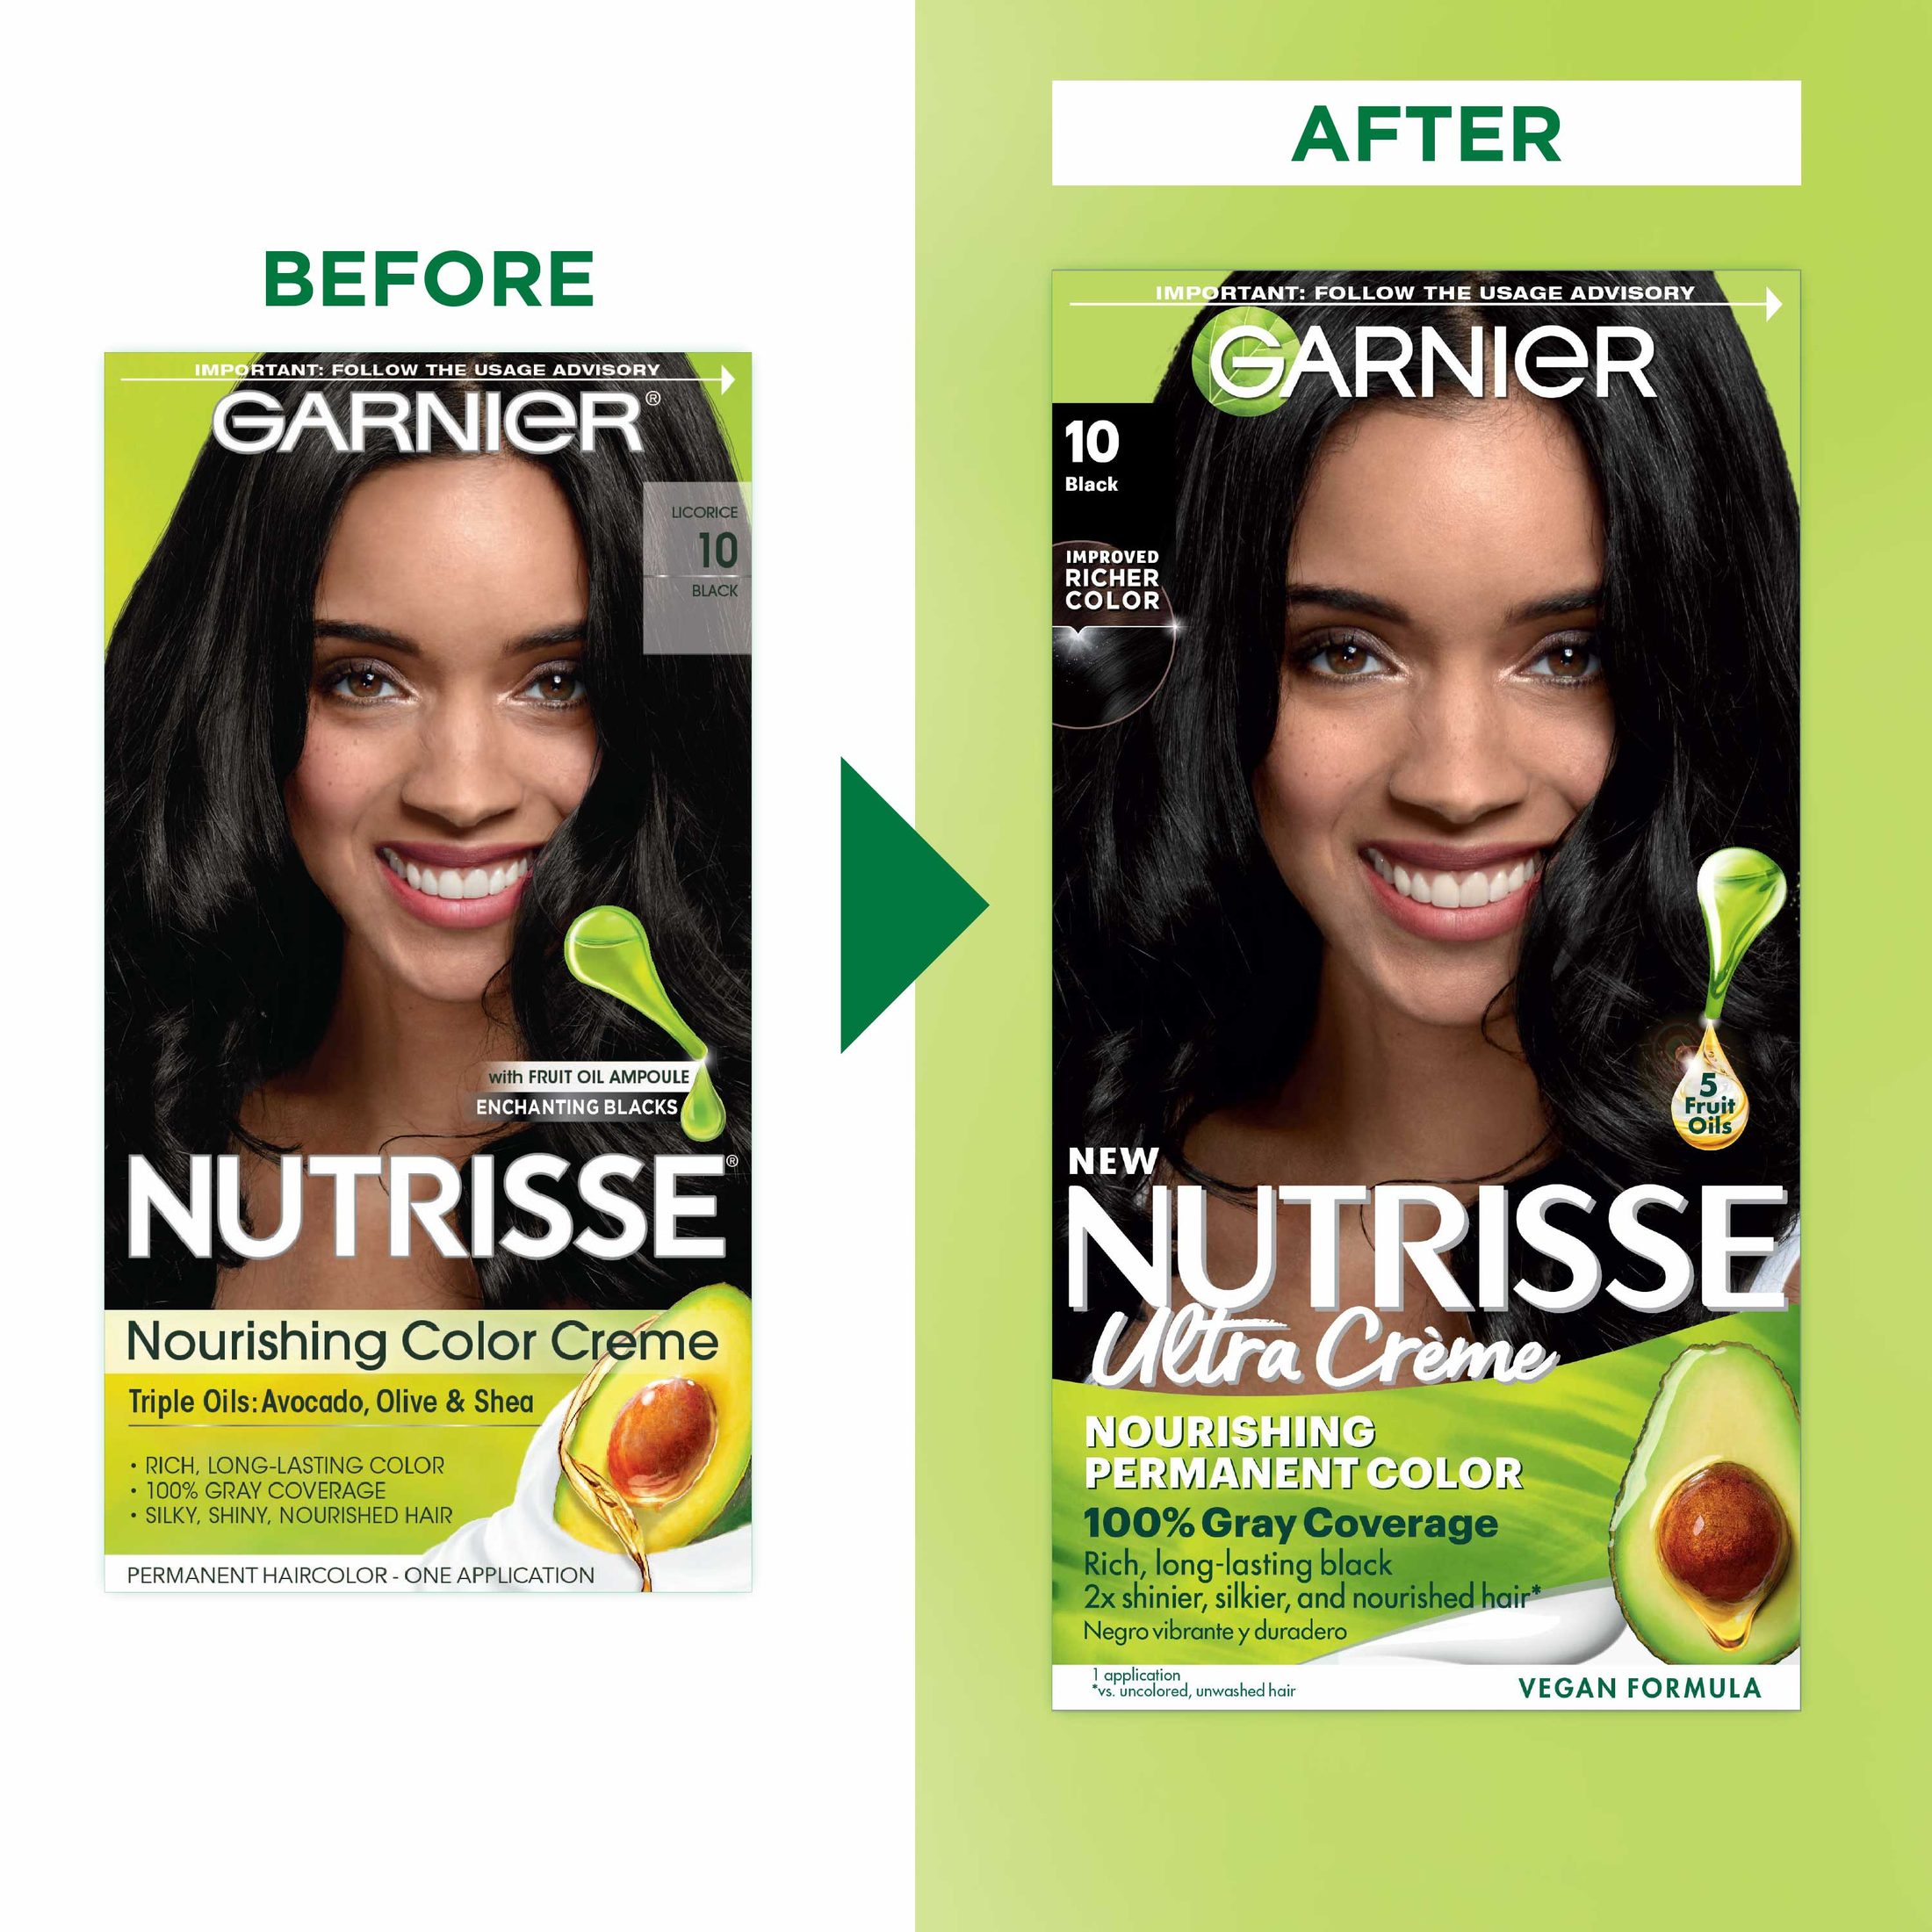 Garnier Nutrisse Nourishing Hair Color Creme, 10 Black Licorice - image 3 of 11